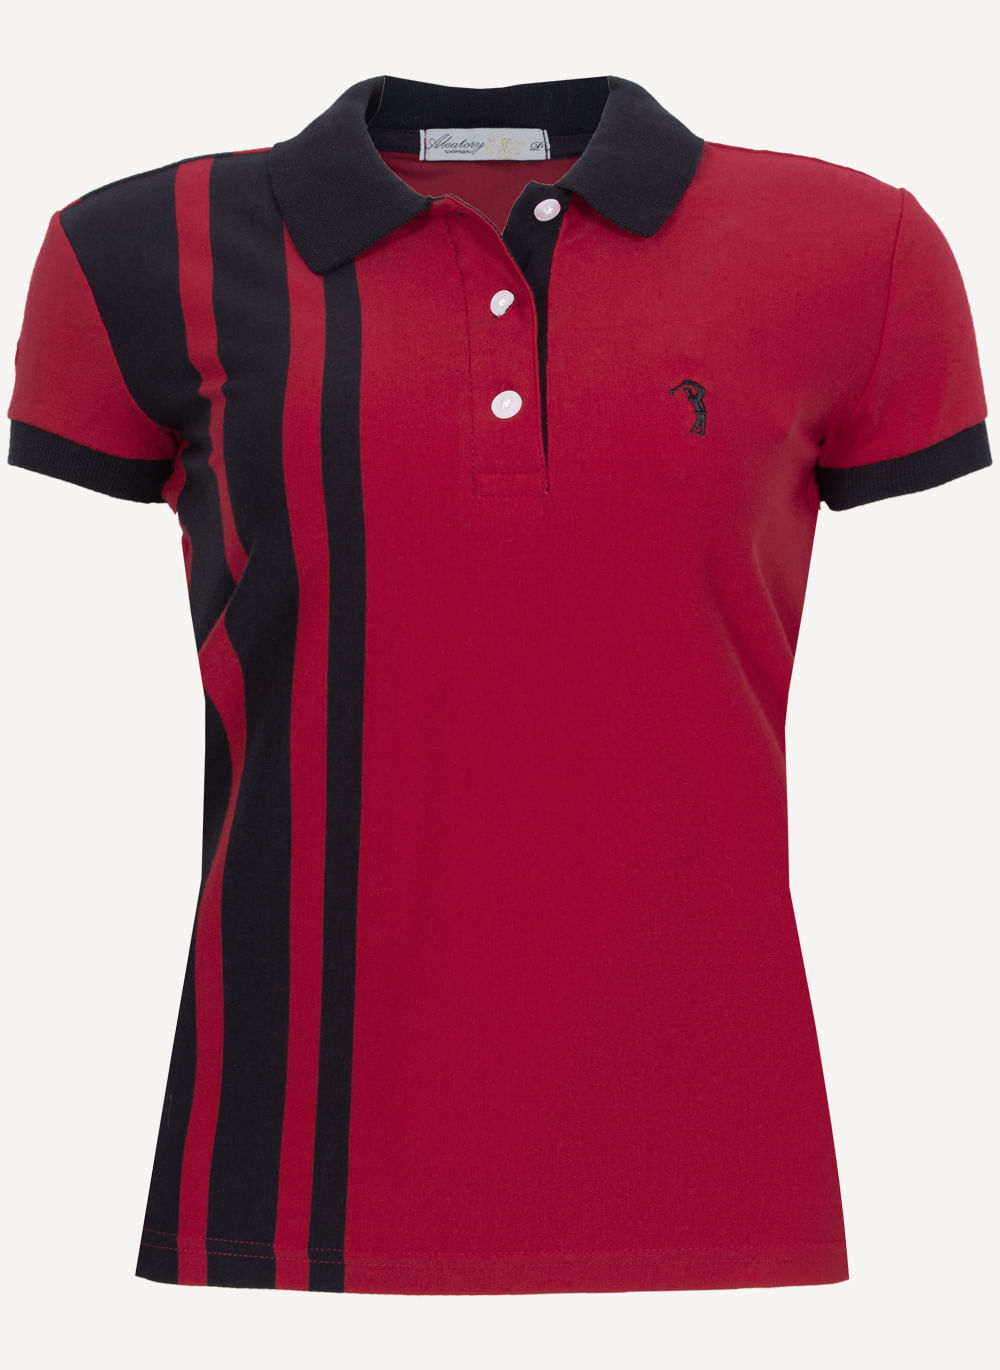 Camisa-Polo-Feminina-Aleatory-Prime-Vermelha-Vermelho-P